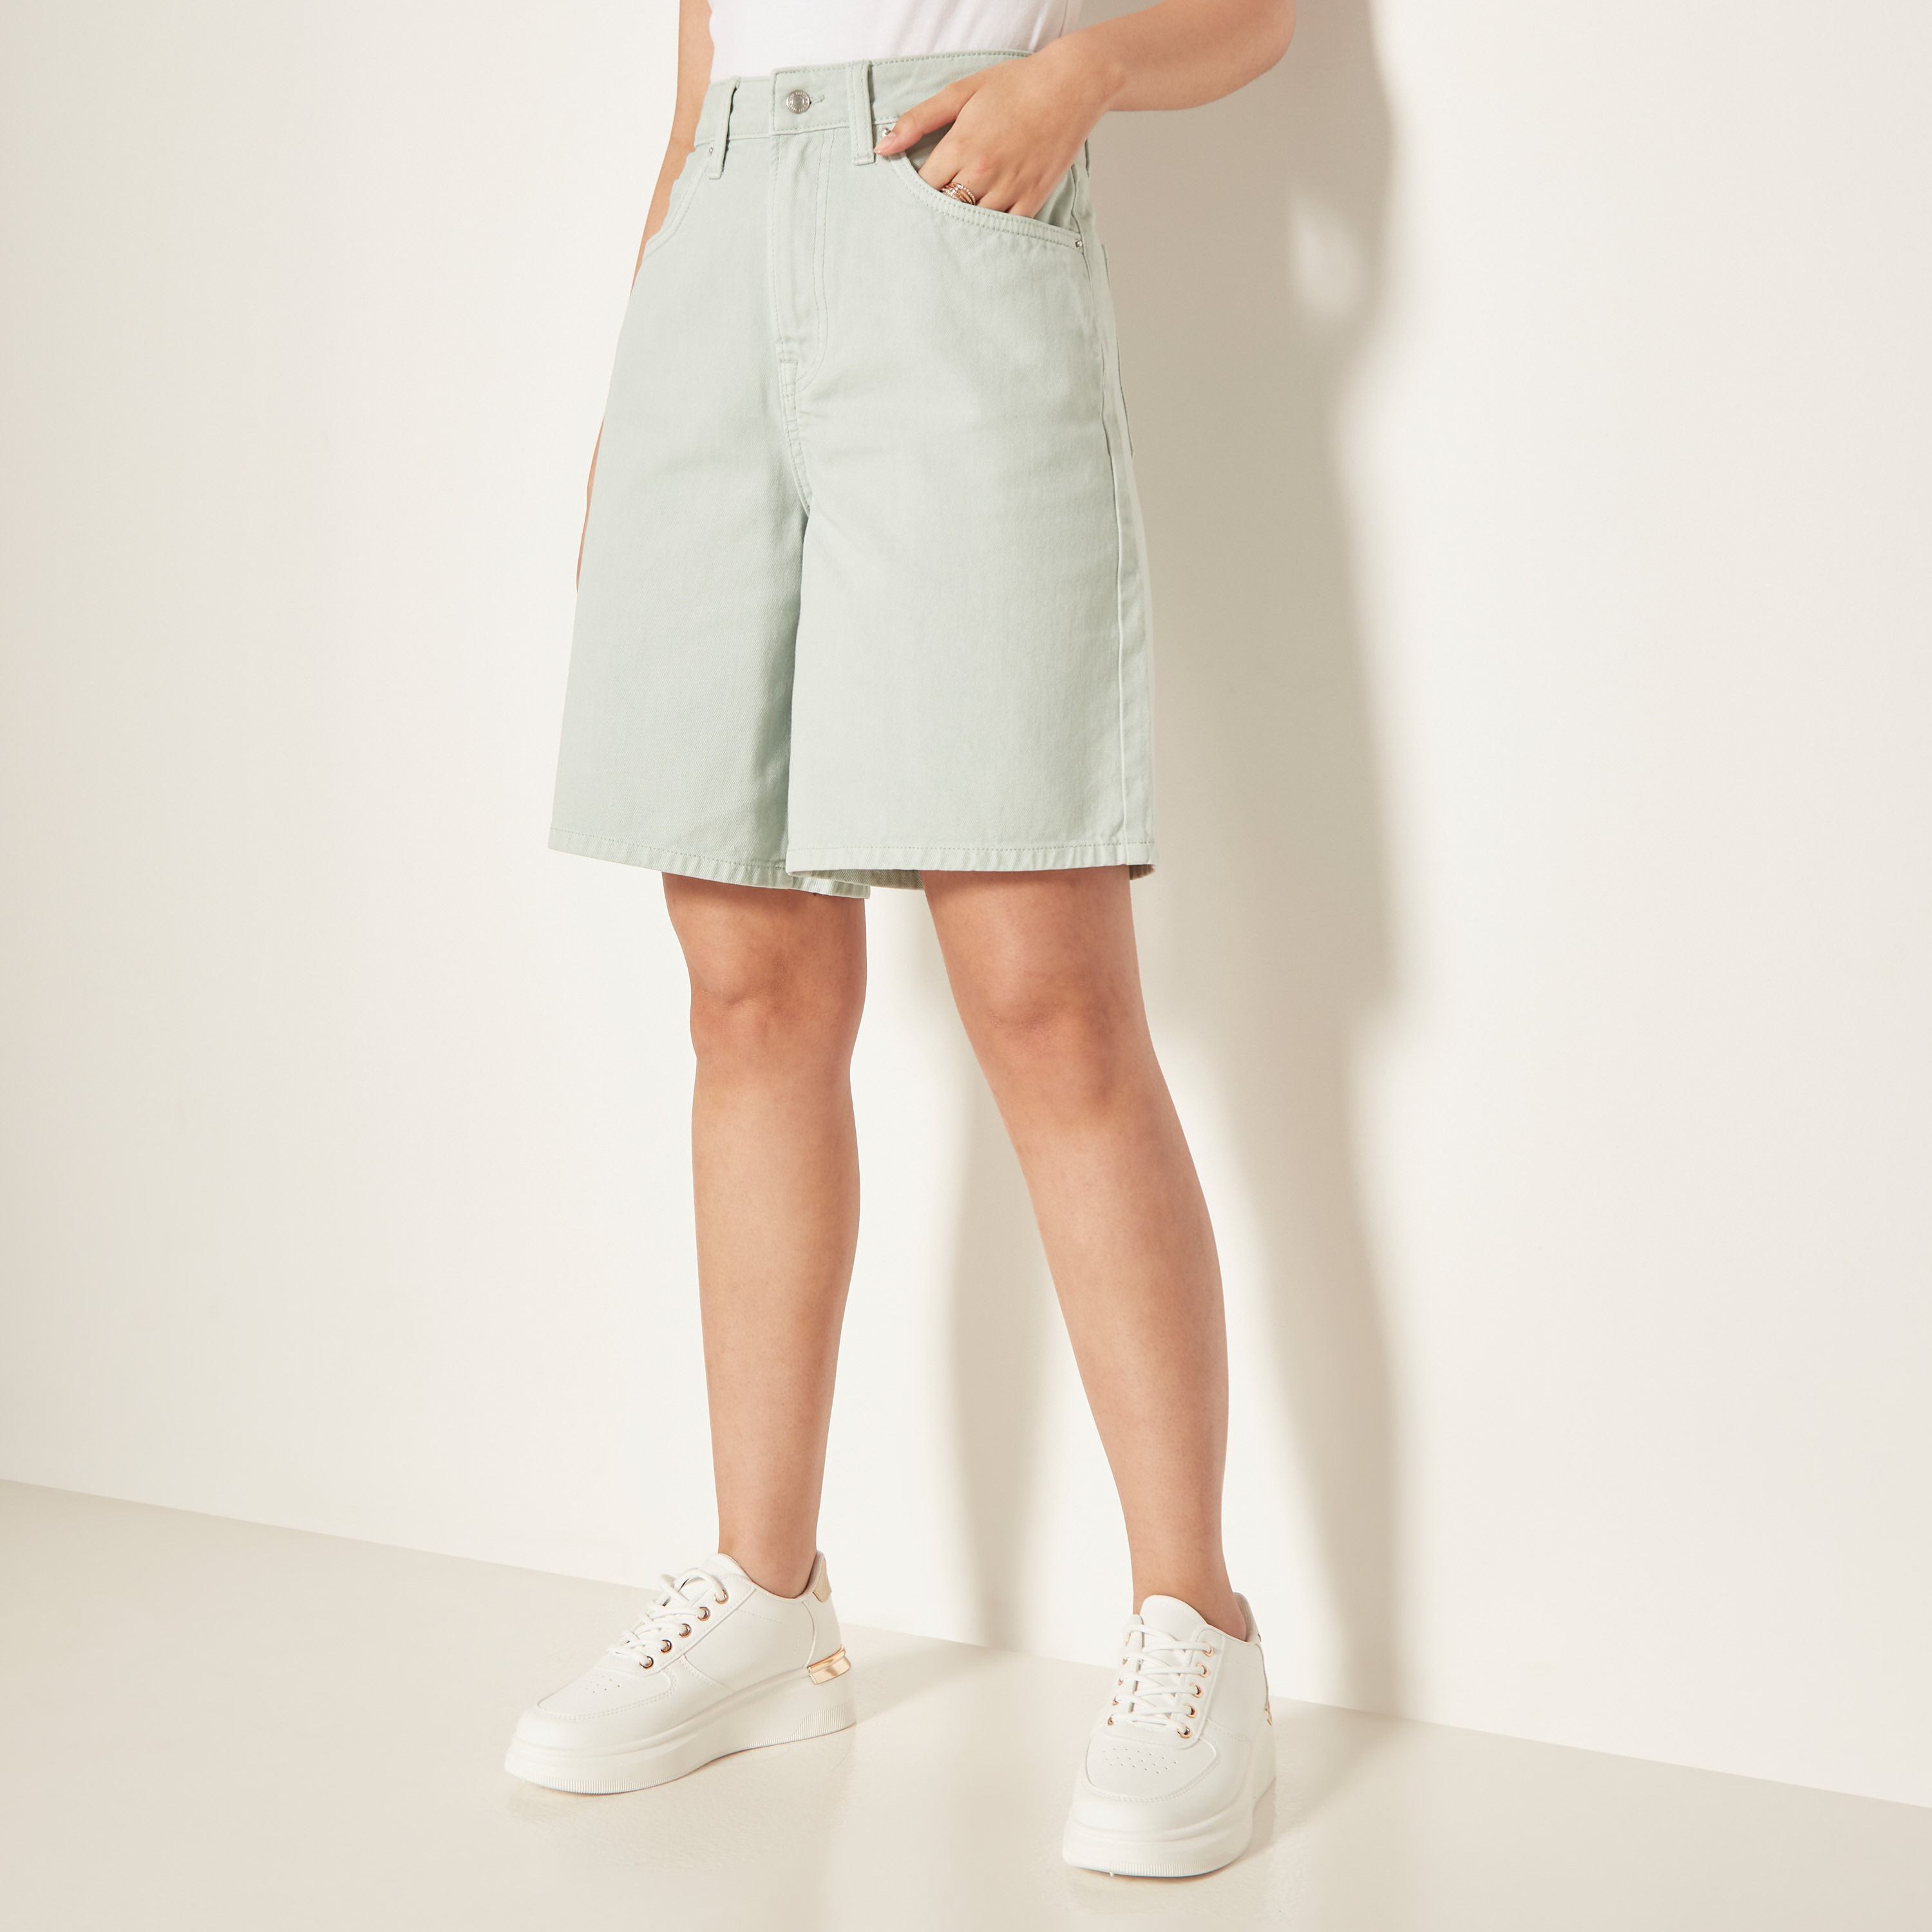 Lee Cooper Girls Denim Shorts - Size 3 – Jean Pool